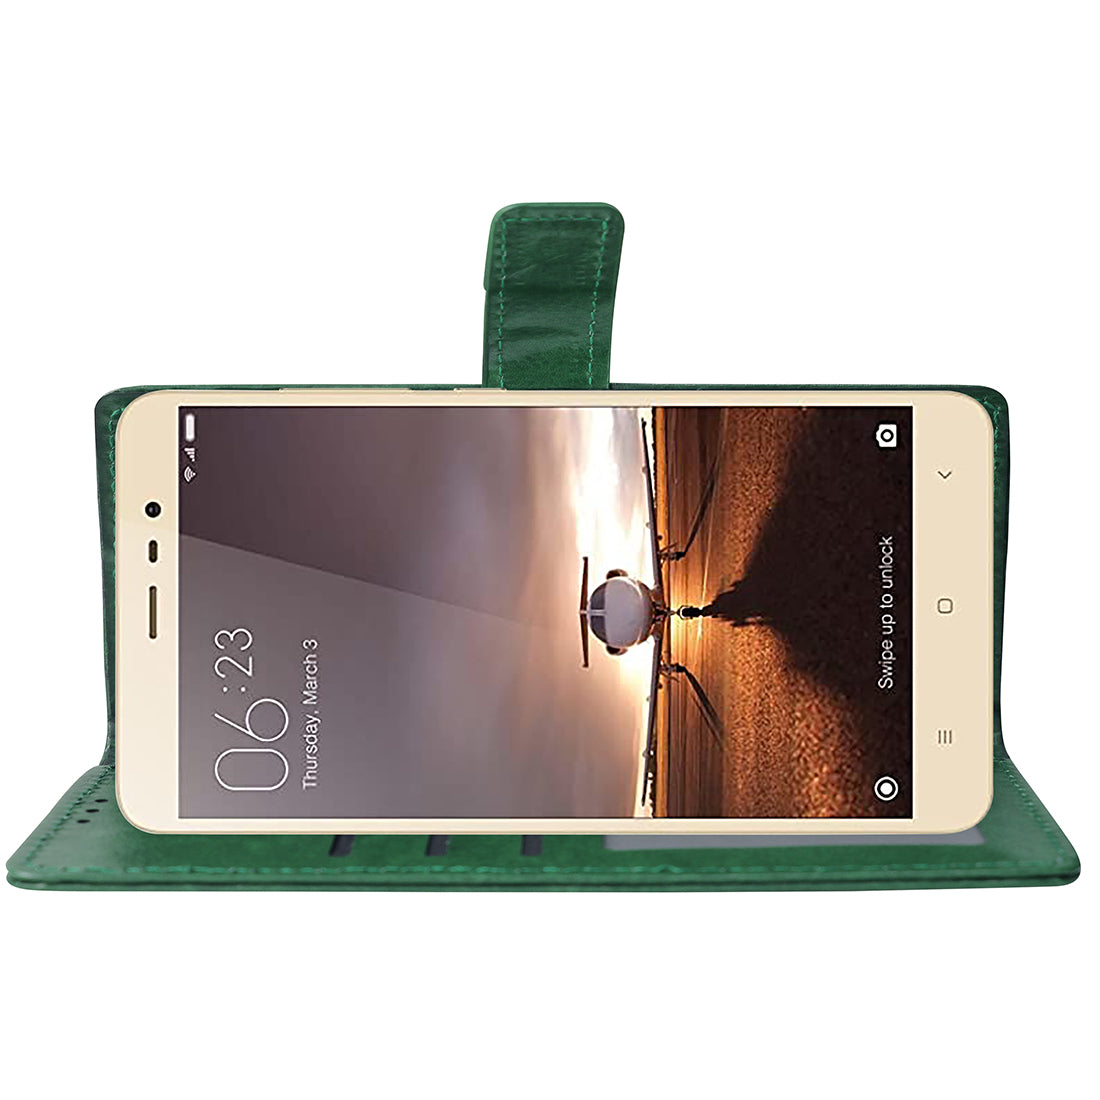 Premium Wallet Flip Cover for Mi Redmi Note 3